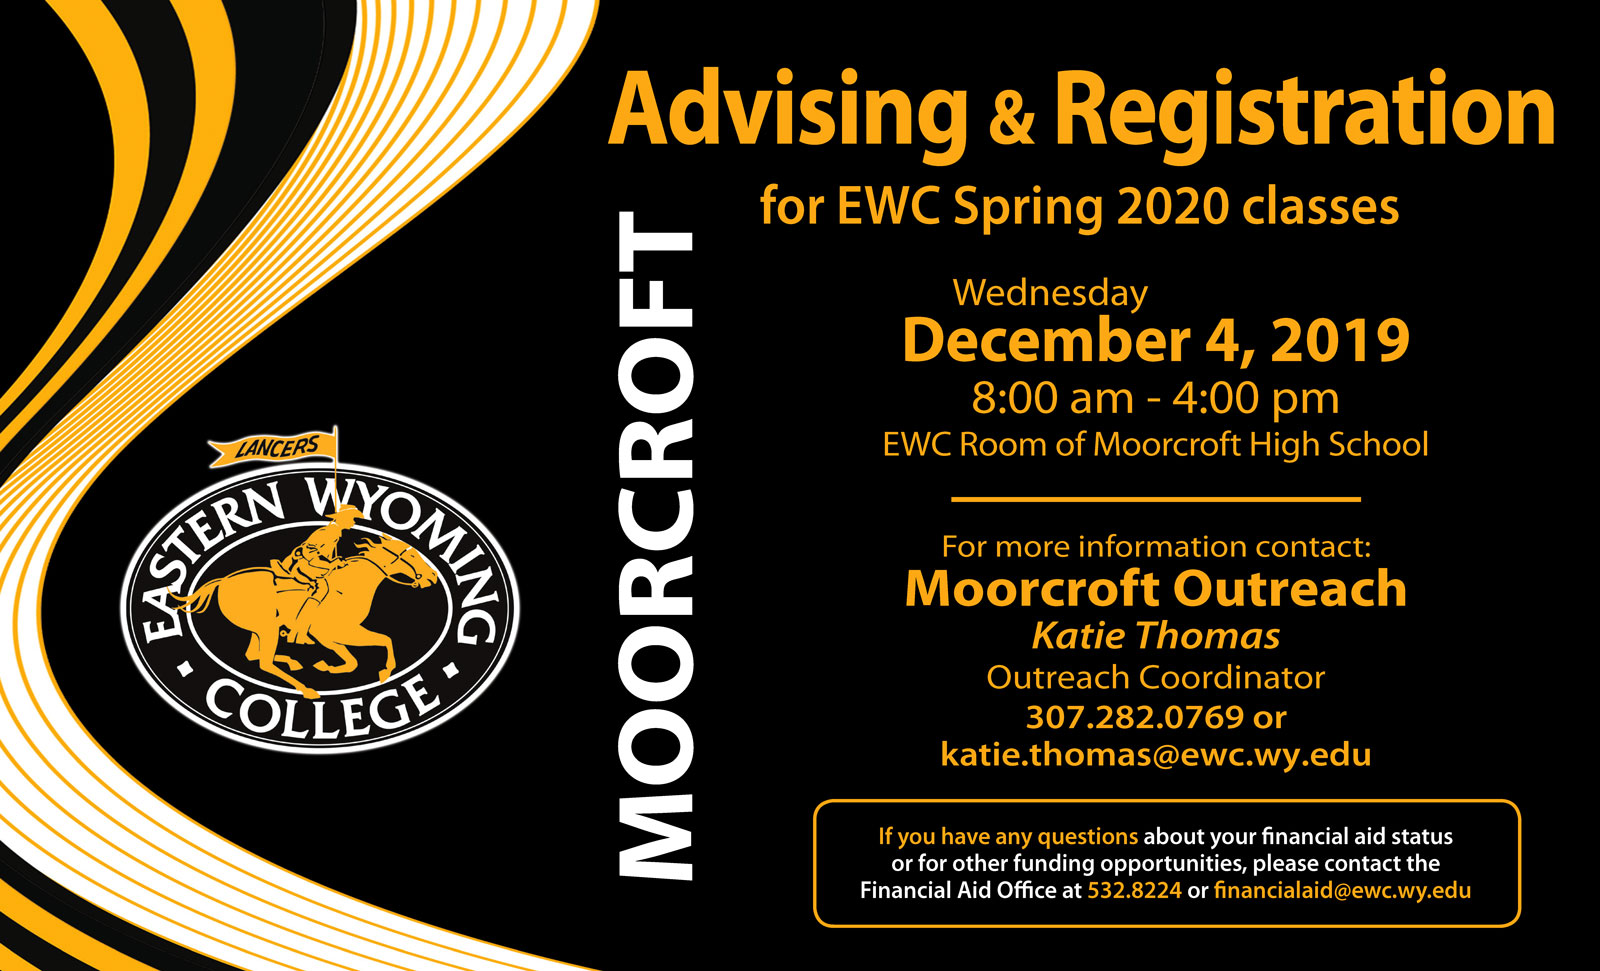 Advising & Registration for EWC Spring 2020 classes